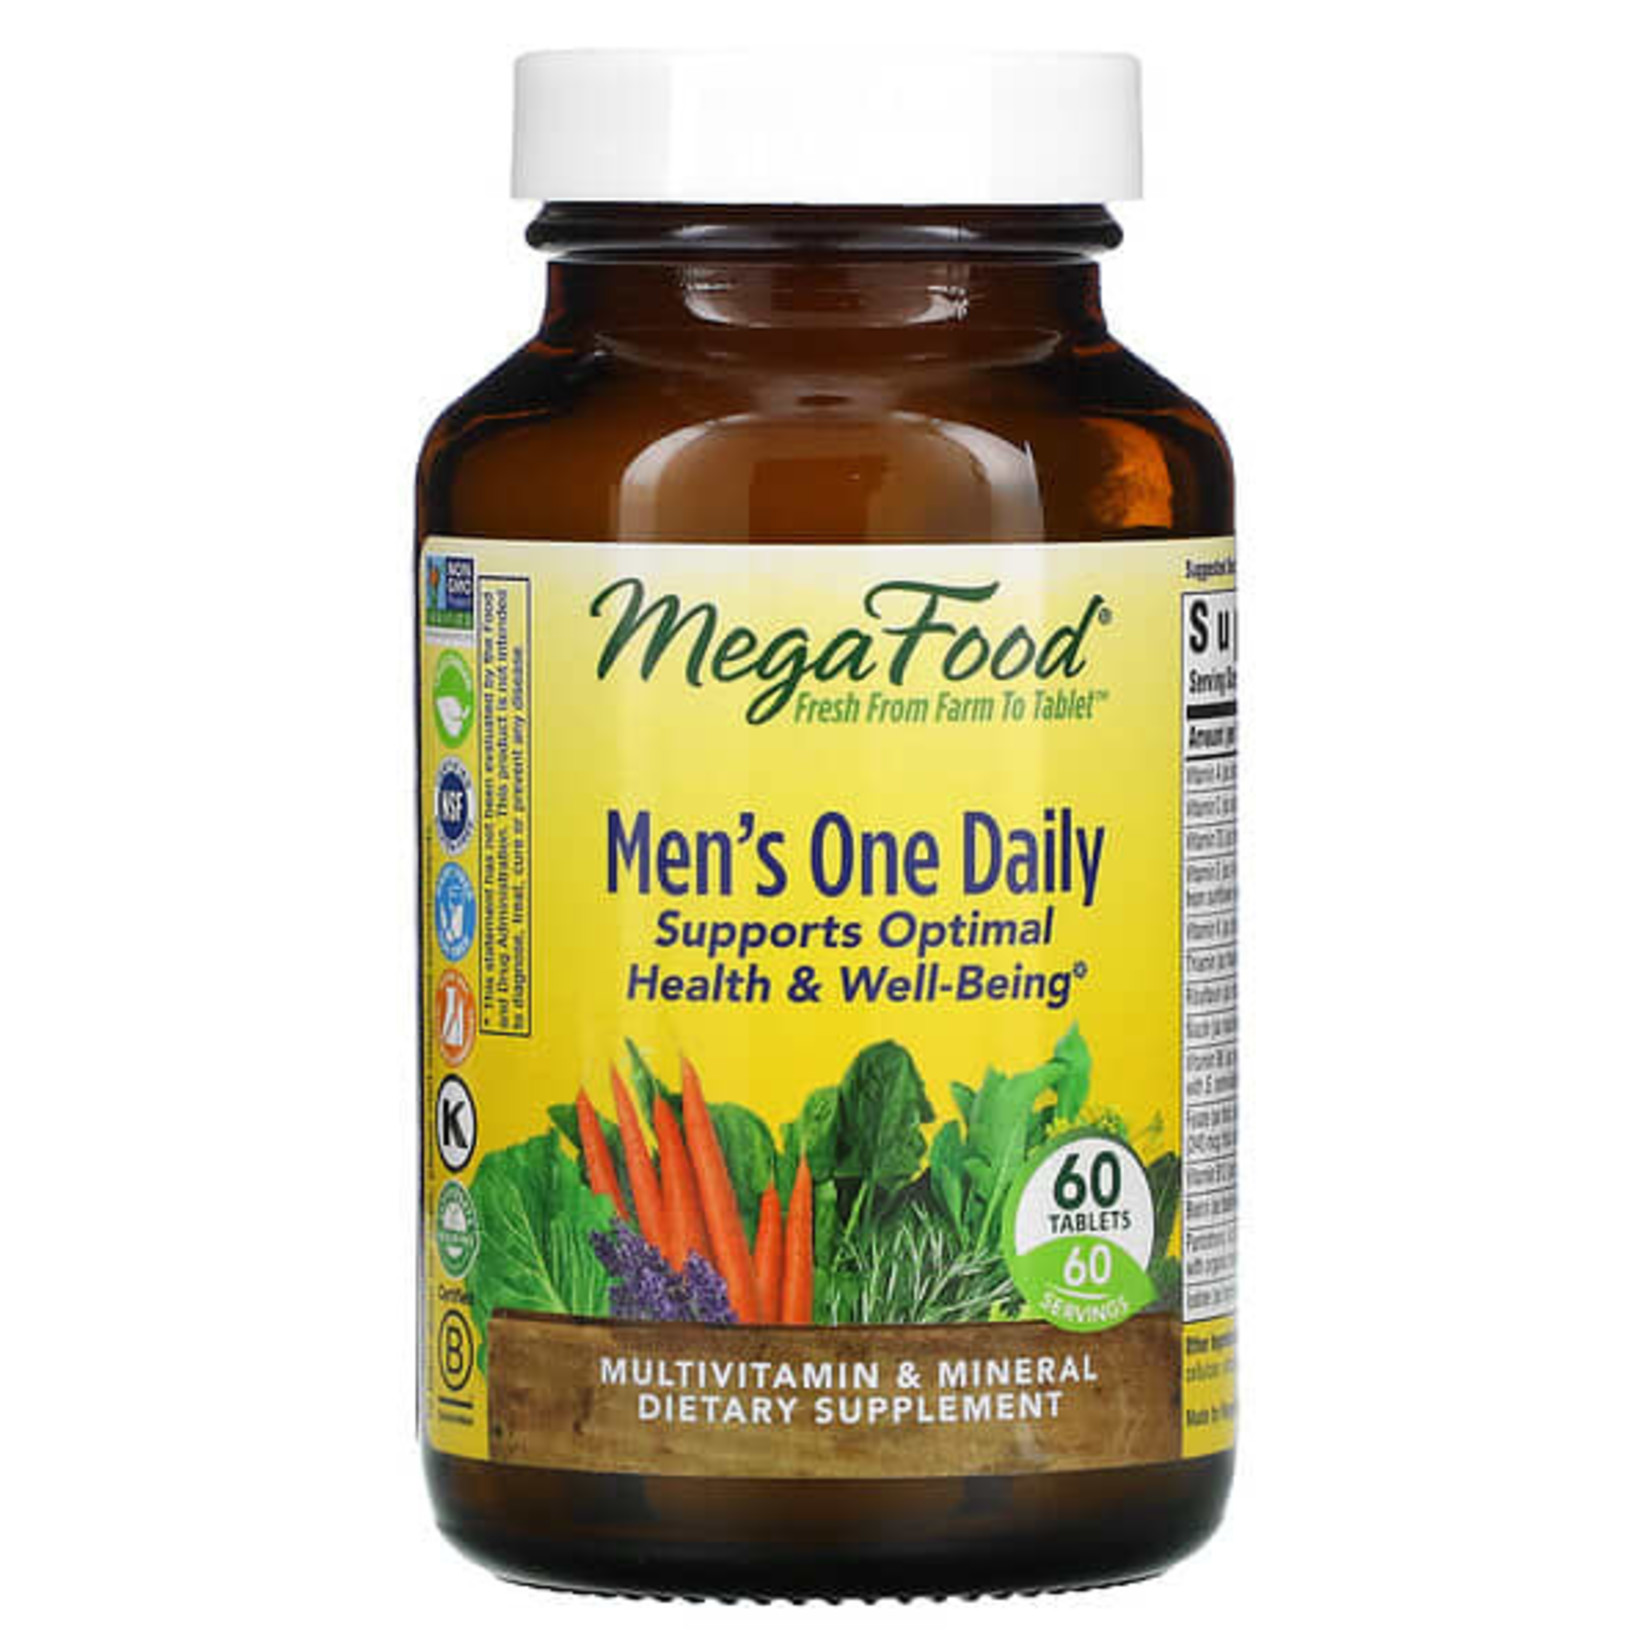 Megafood Megafood - Men’s One Daily - 60 Tablets